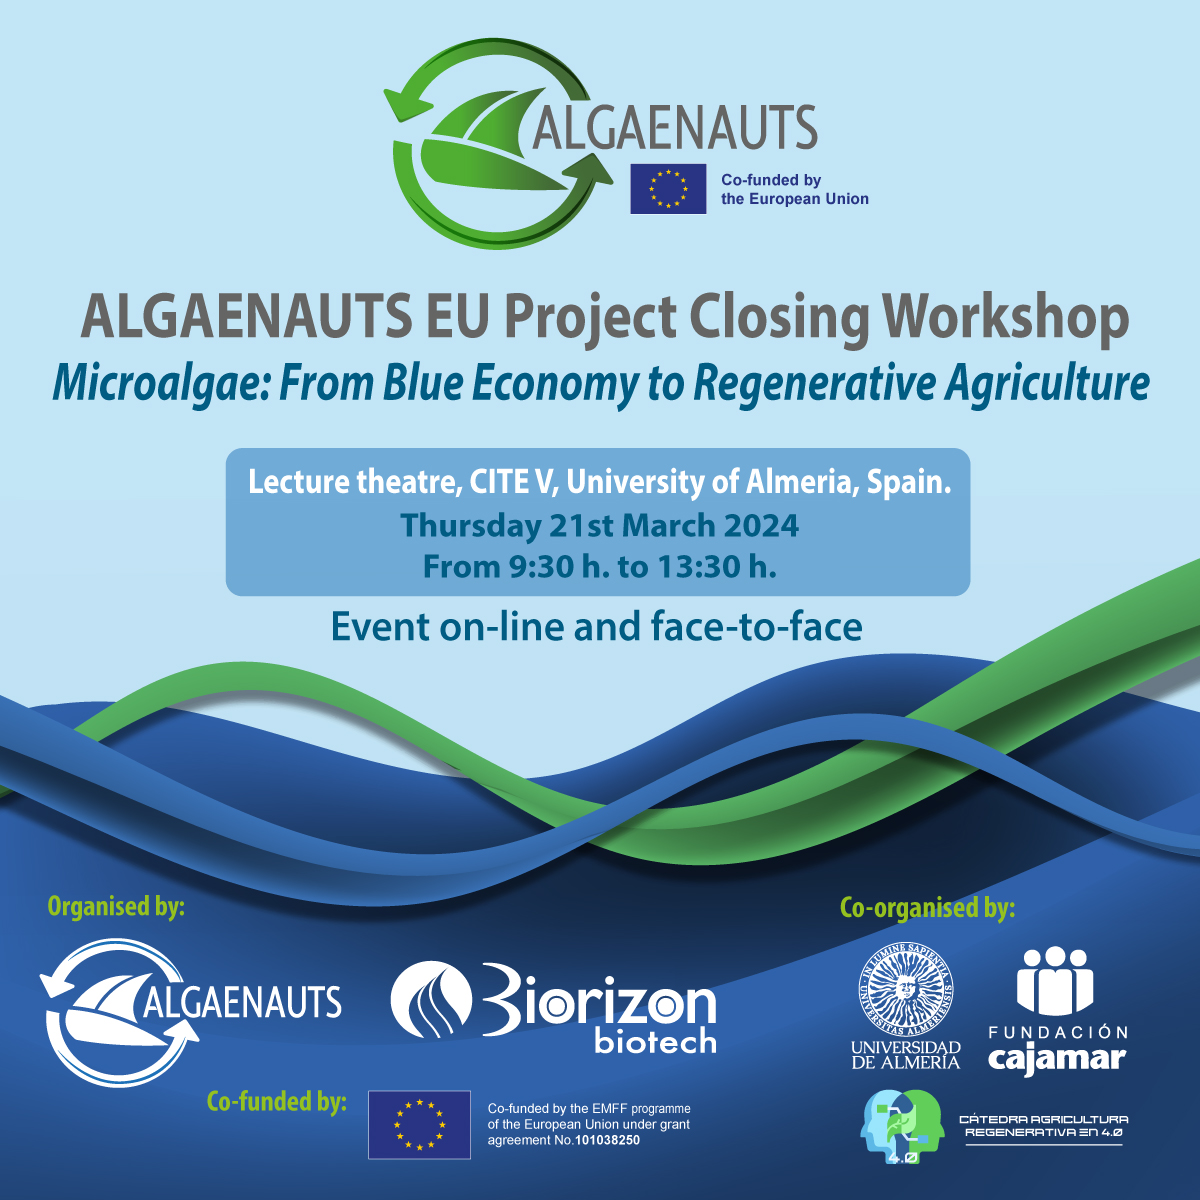 Comienza el workshop ALGAENAUTS EU Project closing workshop “From Blue Economy to Regenerative Agriculture”. A las 9:30 UTC+01:00, síguelo online: 👉lnkd.in/eEchNnTF @cinea_eu @aga_kempny #blueconomy #microalgae #biopesticides @ualmeria @Cajamar @Algaenauts